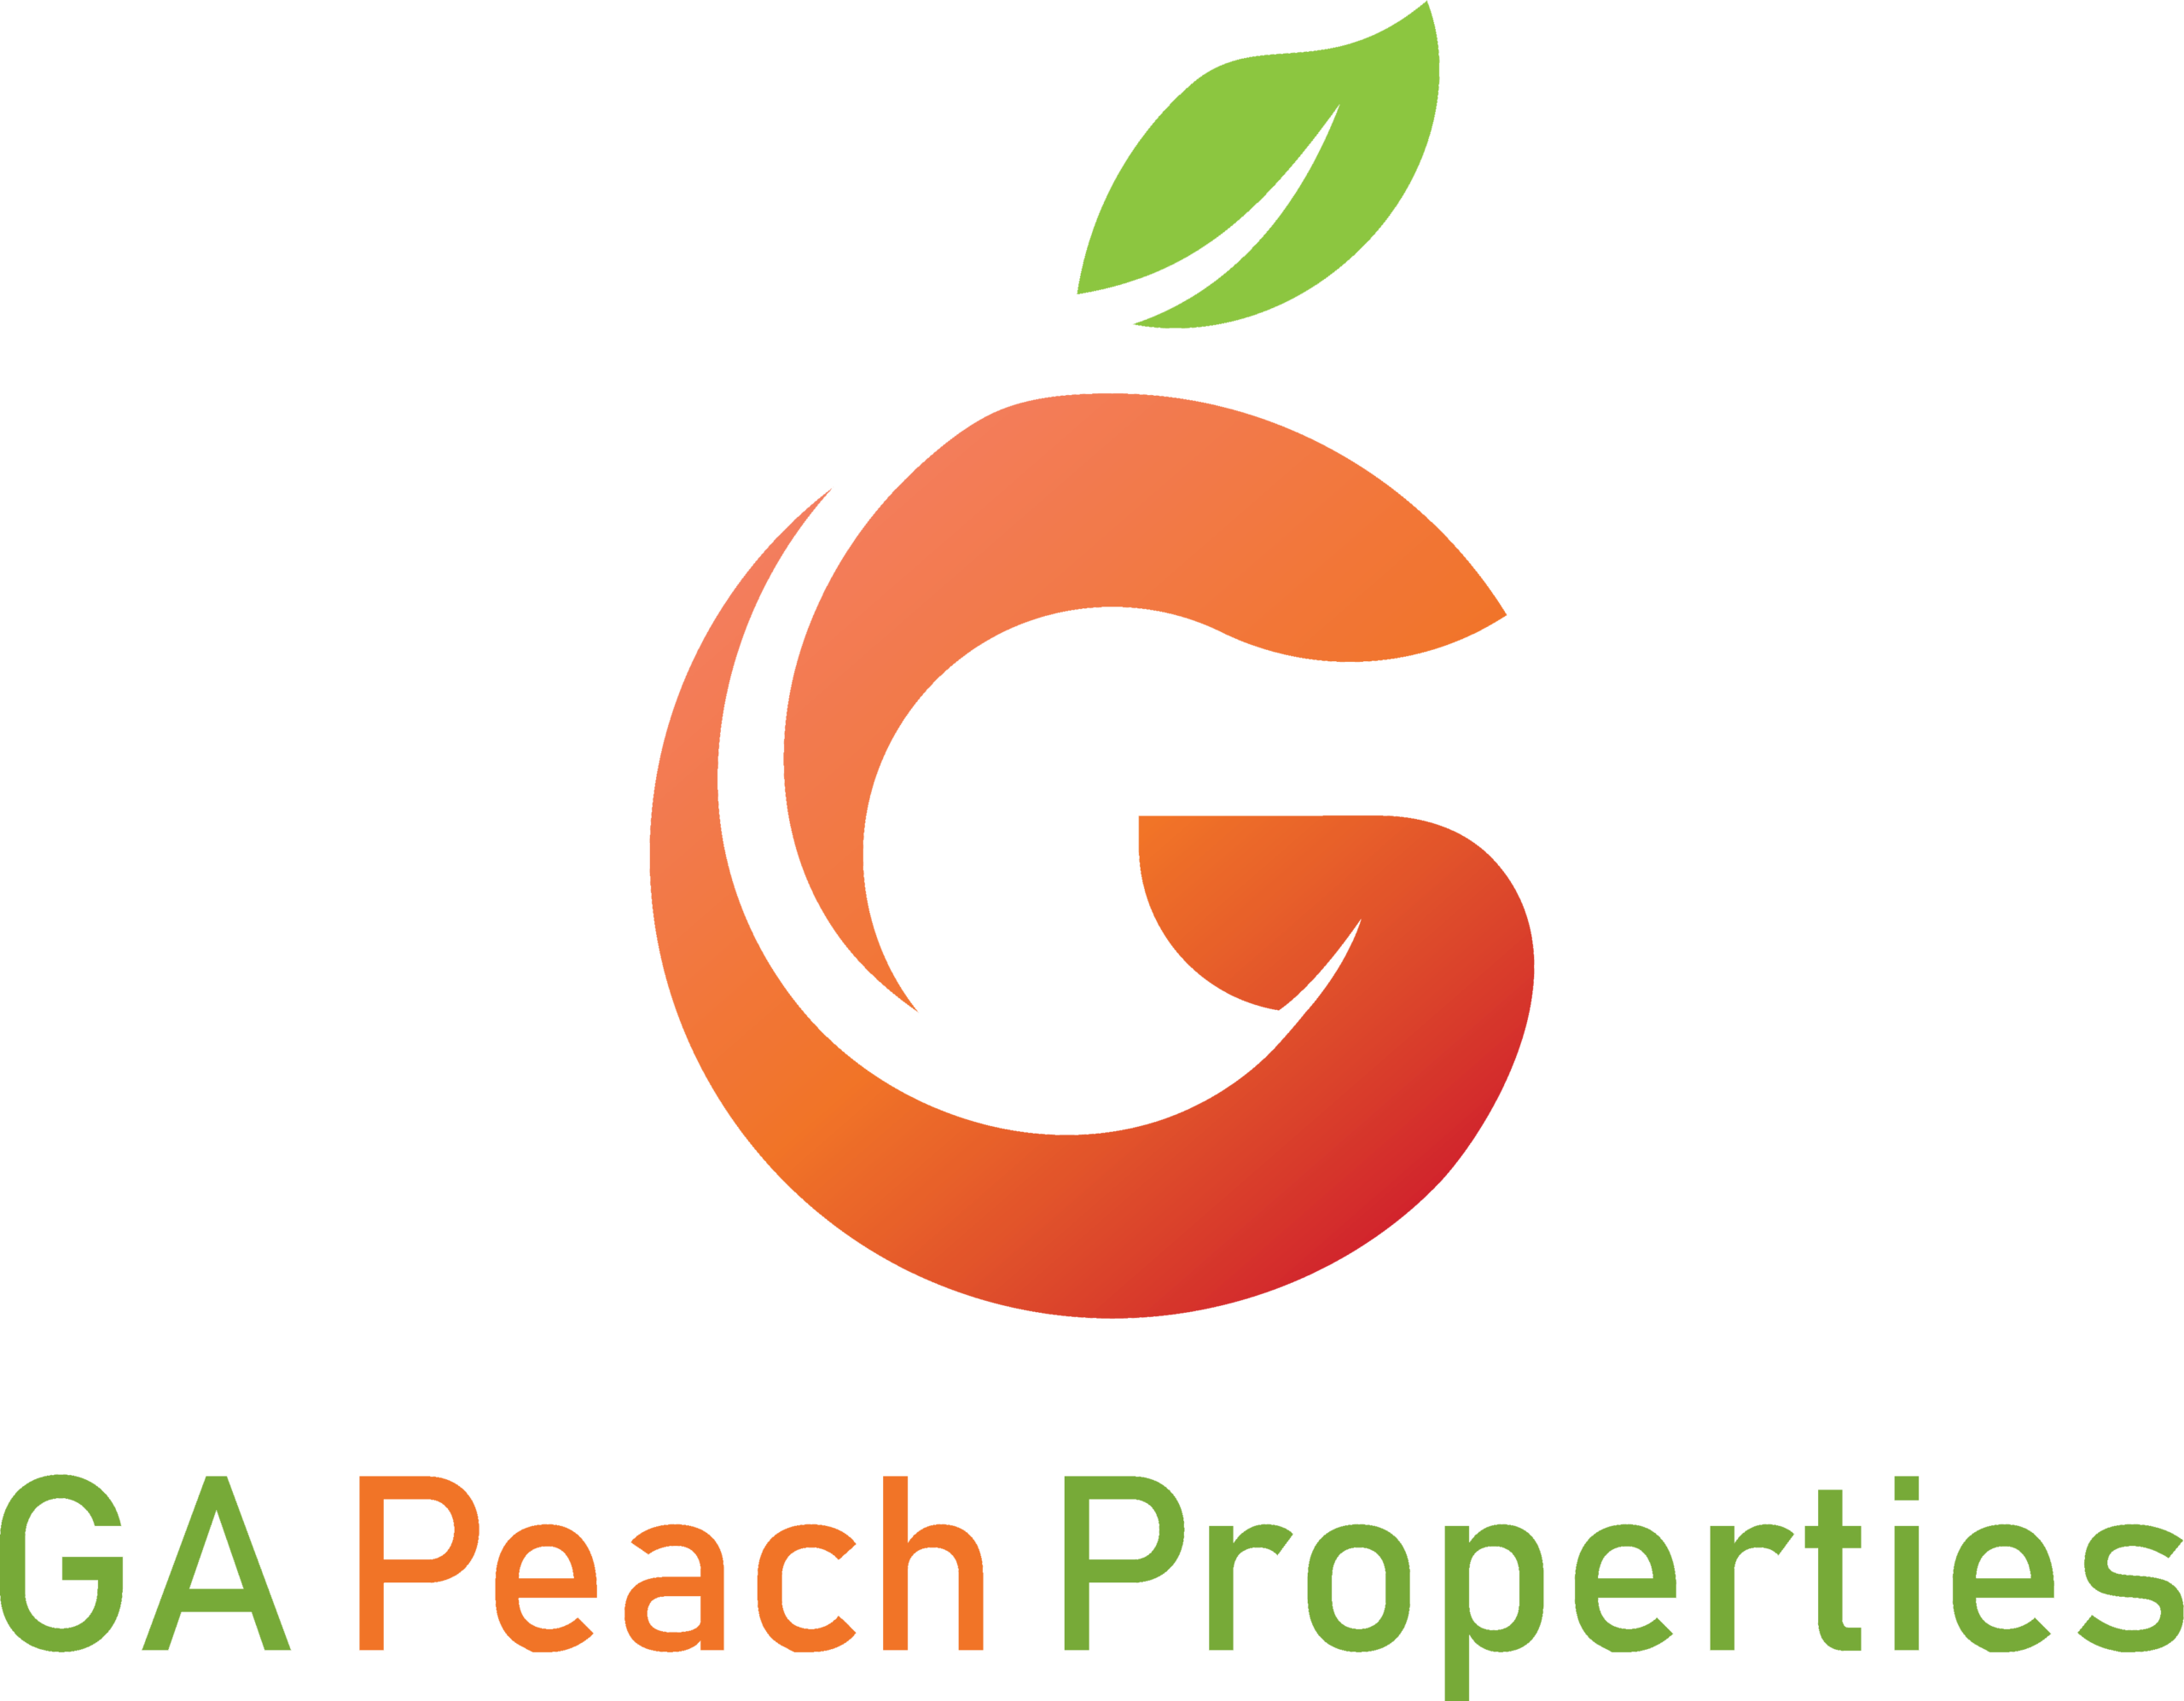 Georgia Peach Properties Management